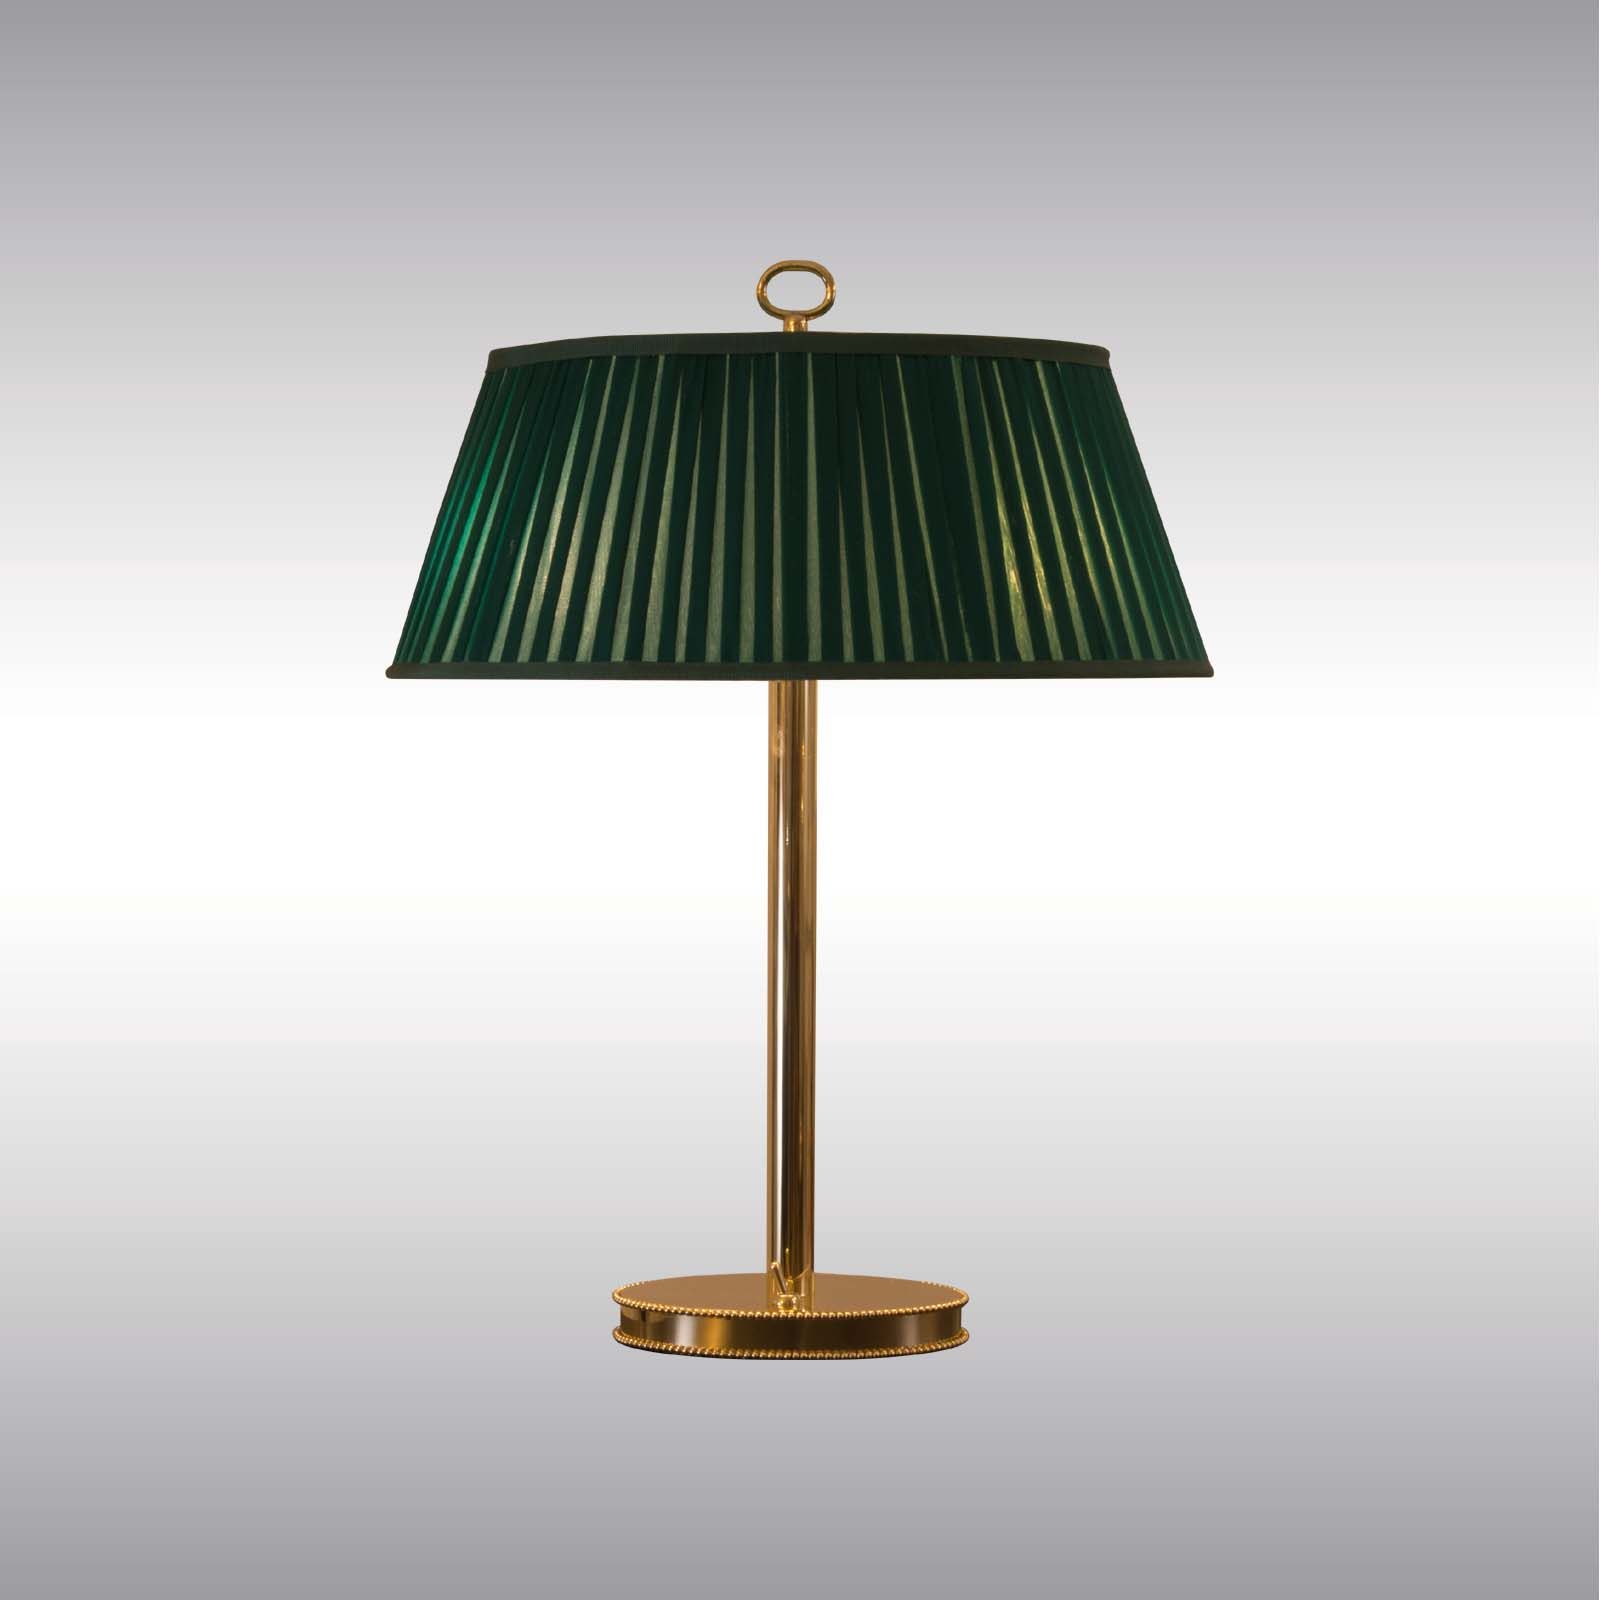 WOKA LAMPS VIENNA - OrderNr.: 21620|Josef Hoffmann Desk-Lamp - Design: Josef Hoffmann